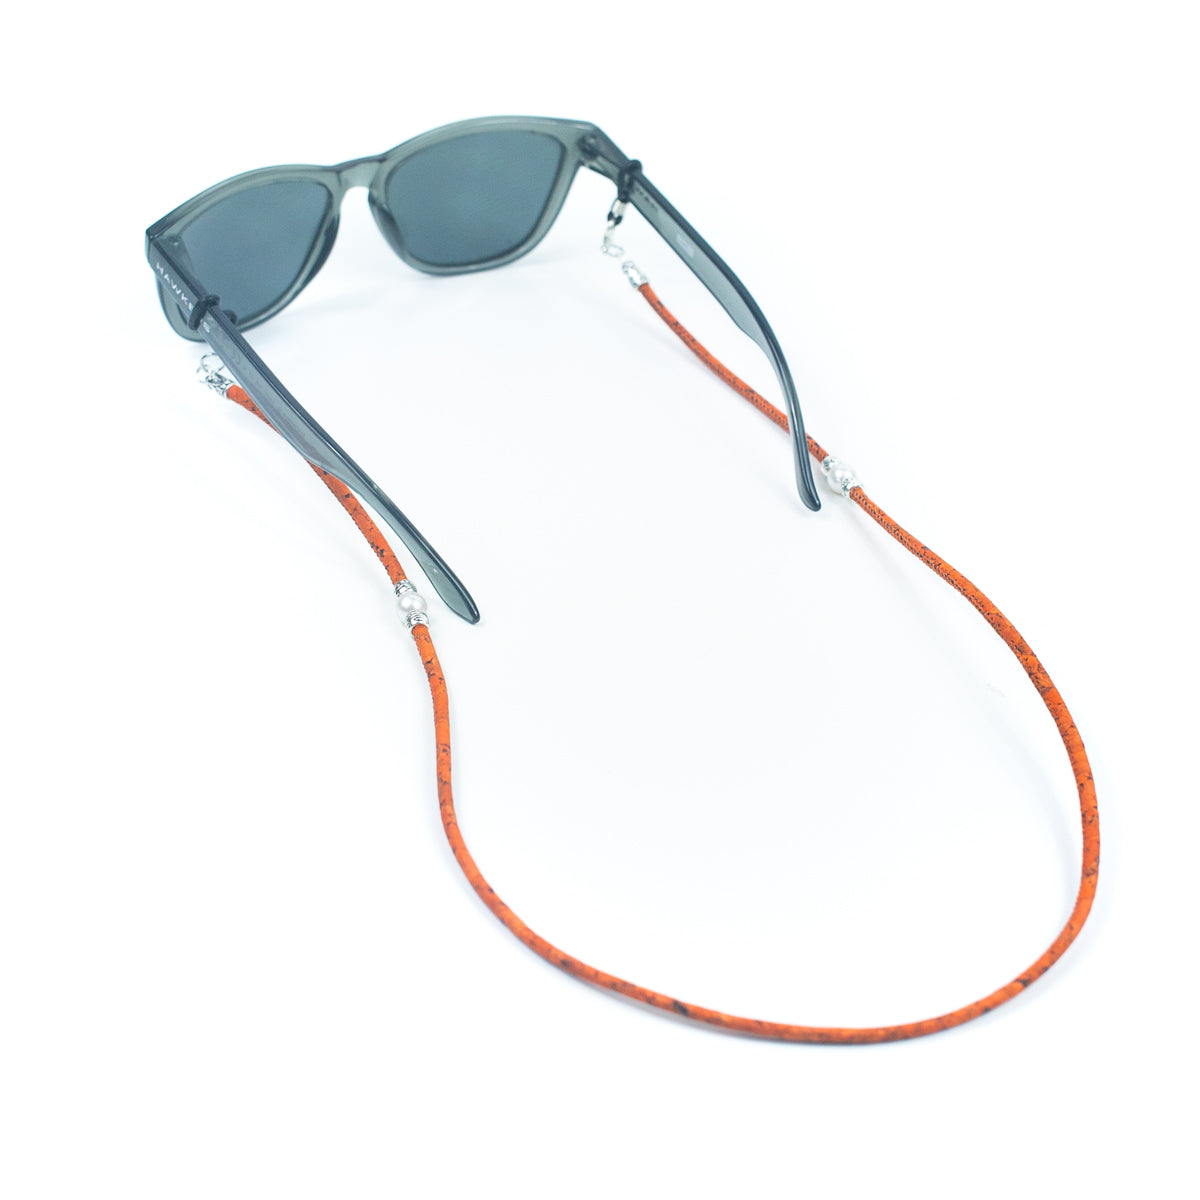 3MM Handmade Round Cork Thread Eyeglass Holder Glasses | THE CORK COLLECTION